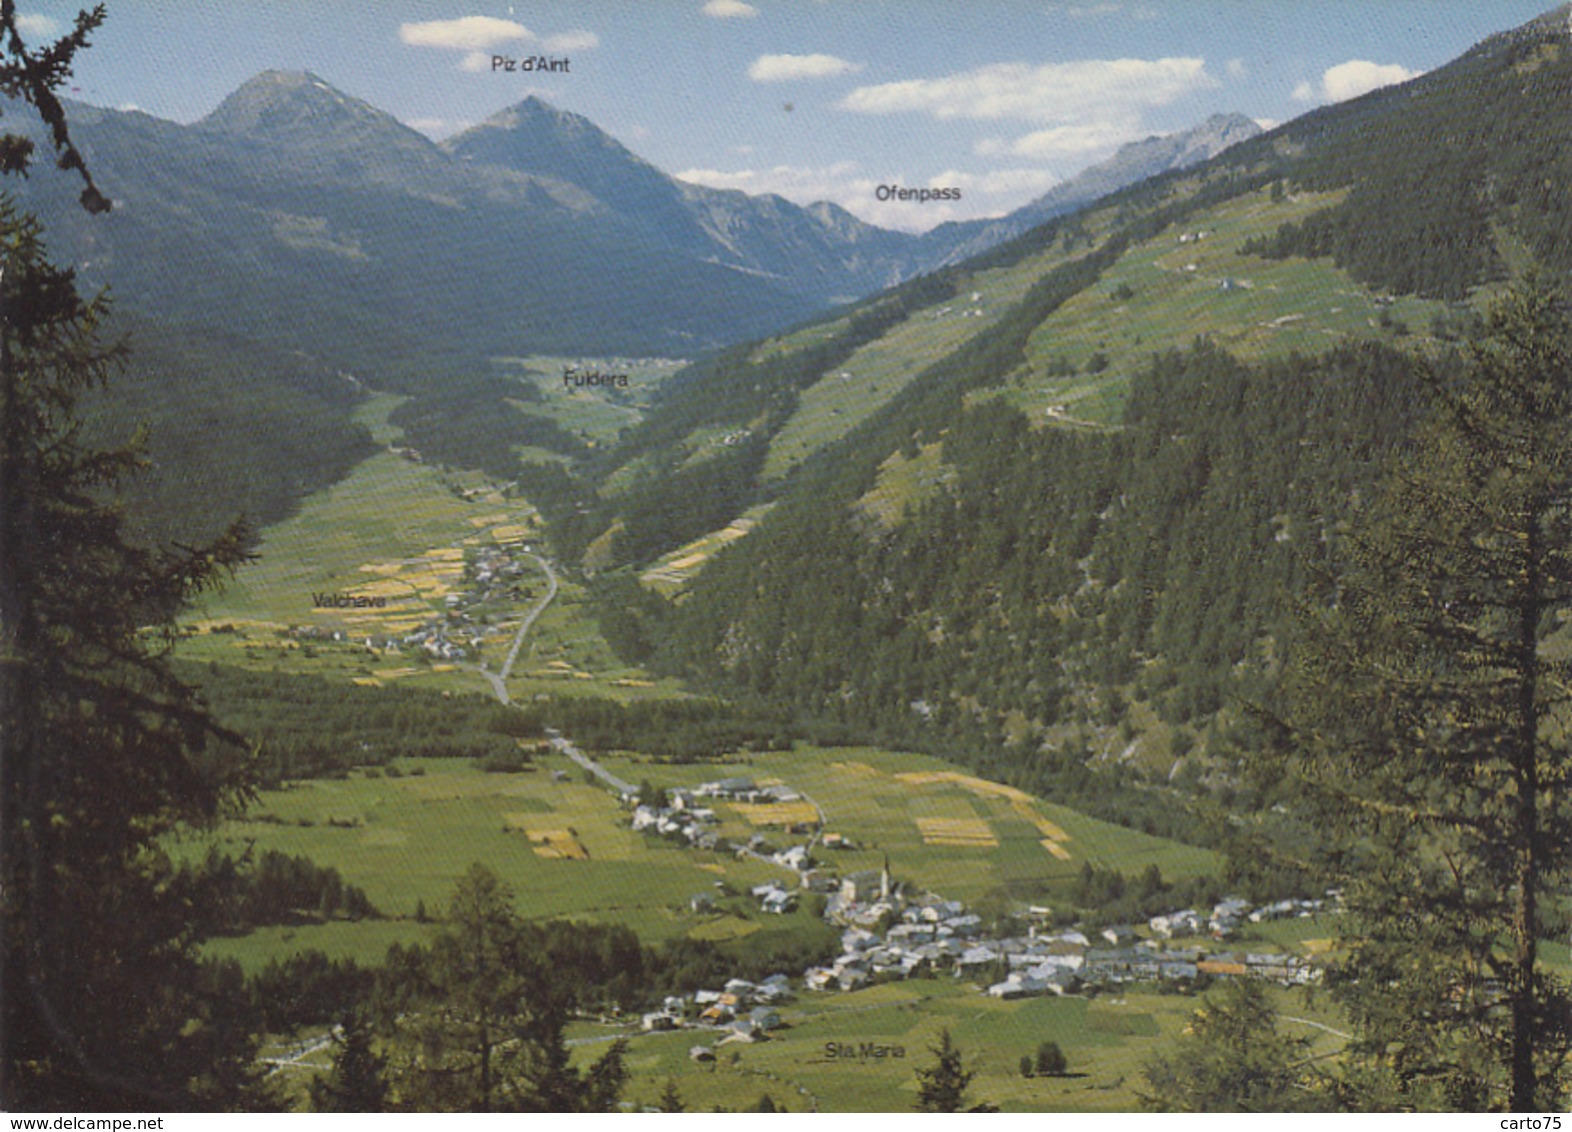 Suisse - Santa Maria Val Müstair Gegen Valchava - Fuldera - Piz D'Aint - Ofenpass - Fuldera